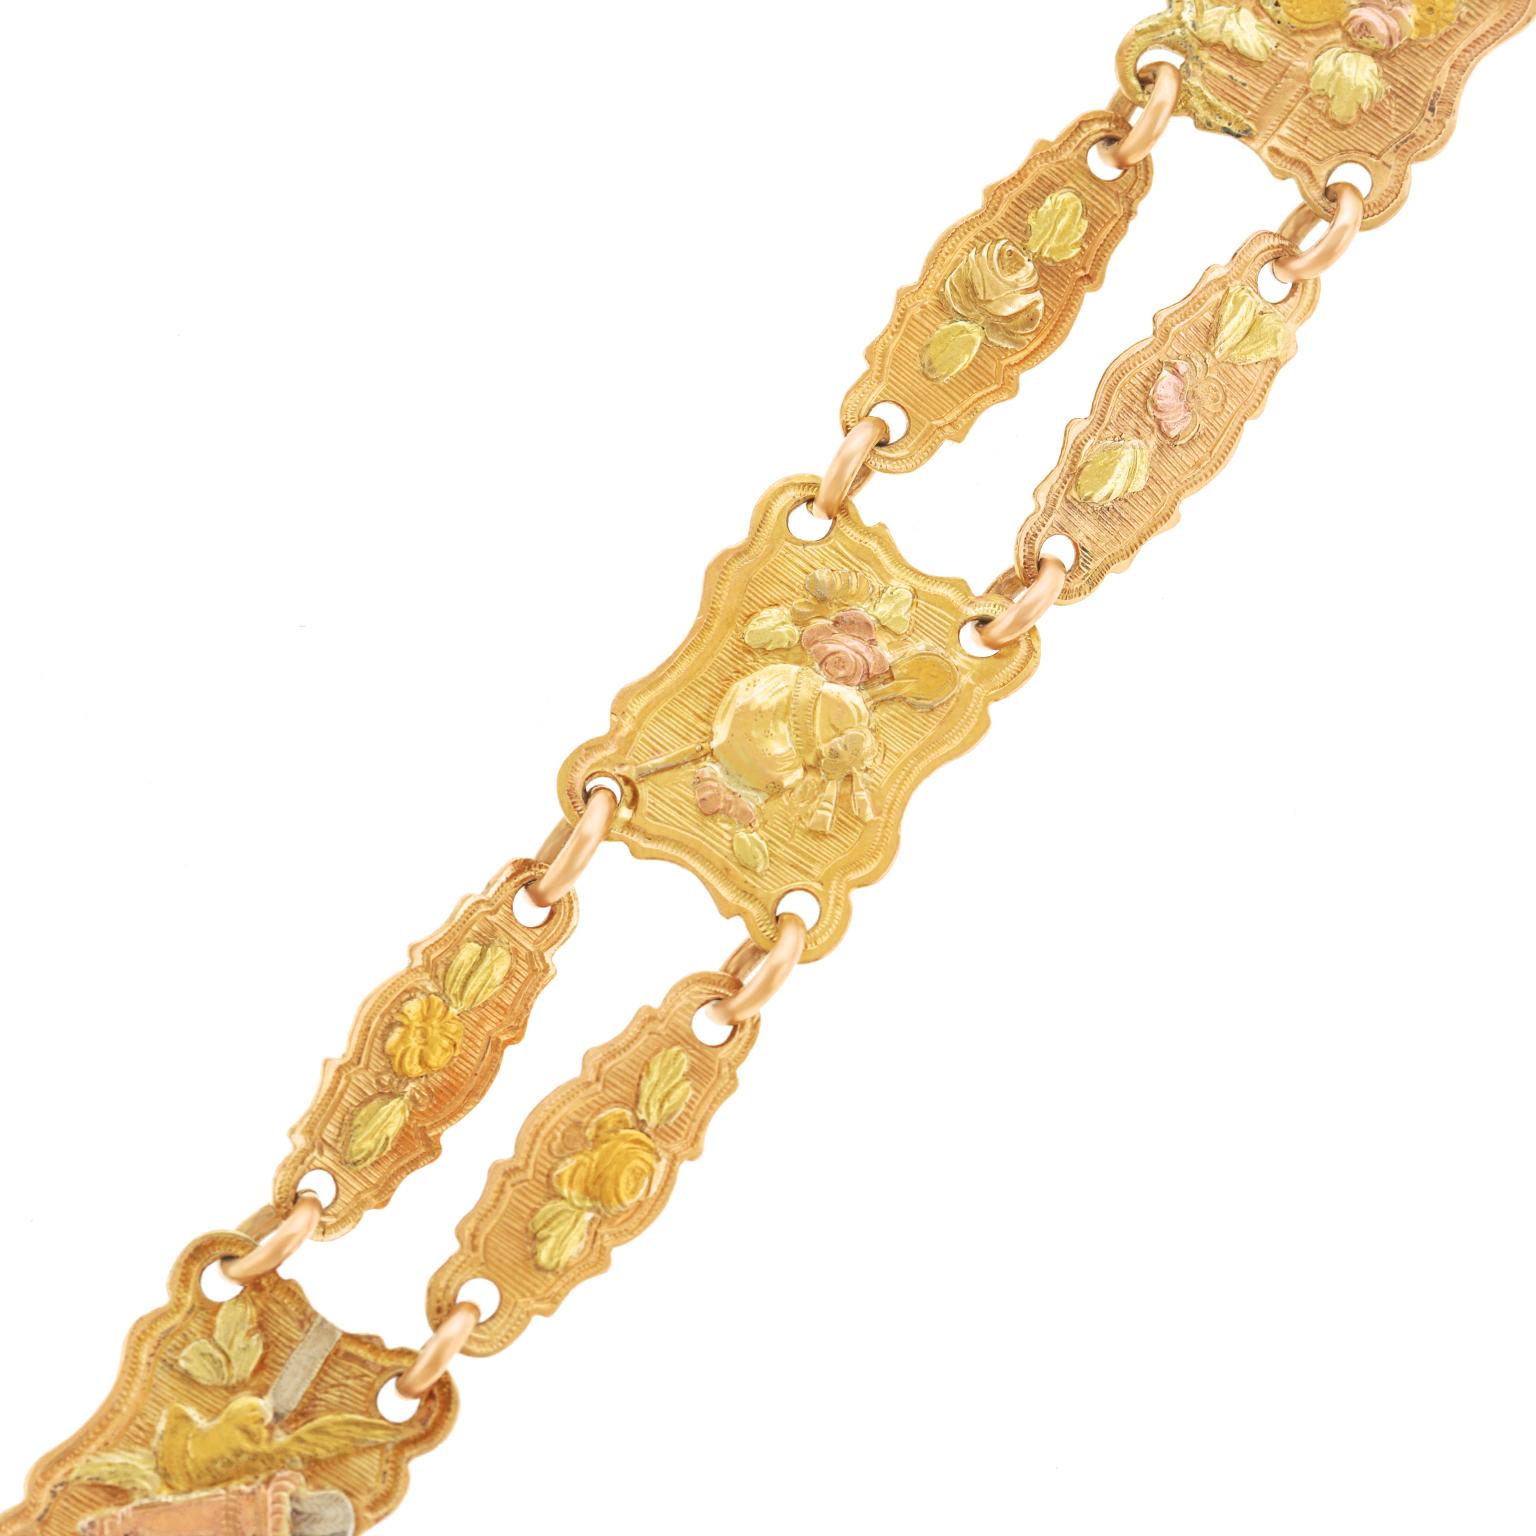 Antique Venetian Gold Bracelet with Spectacular Charm 2